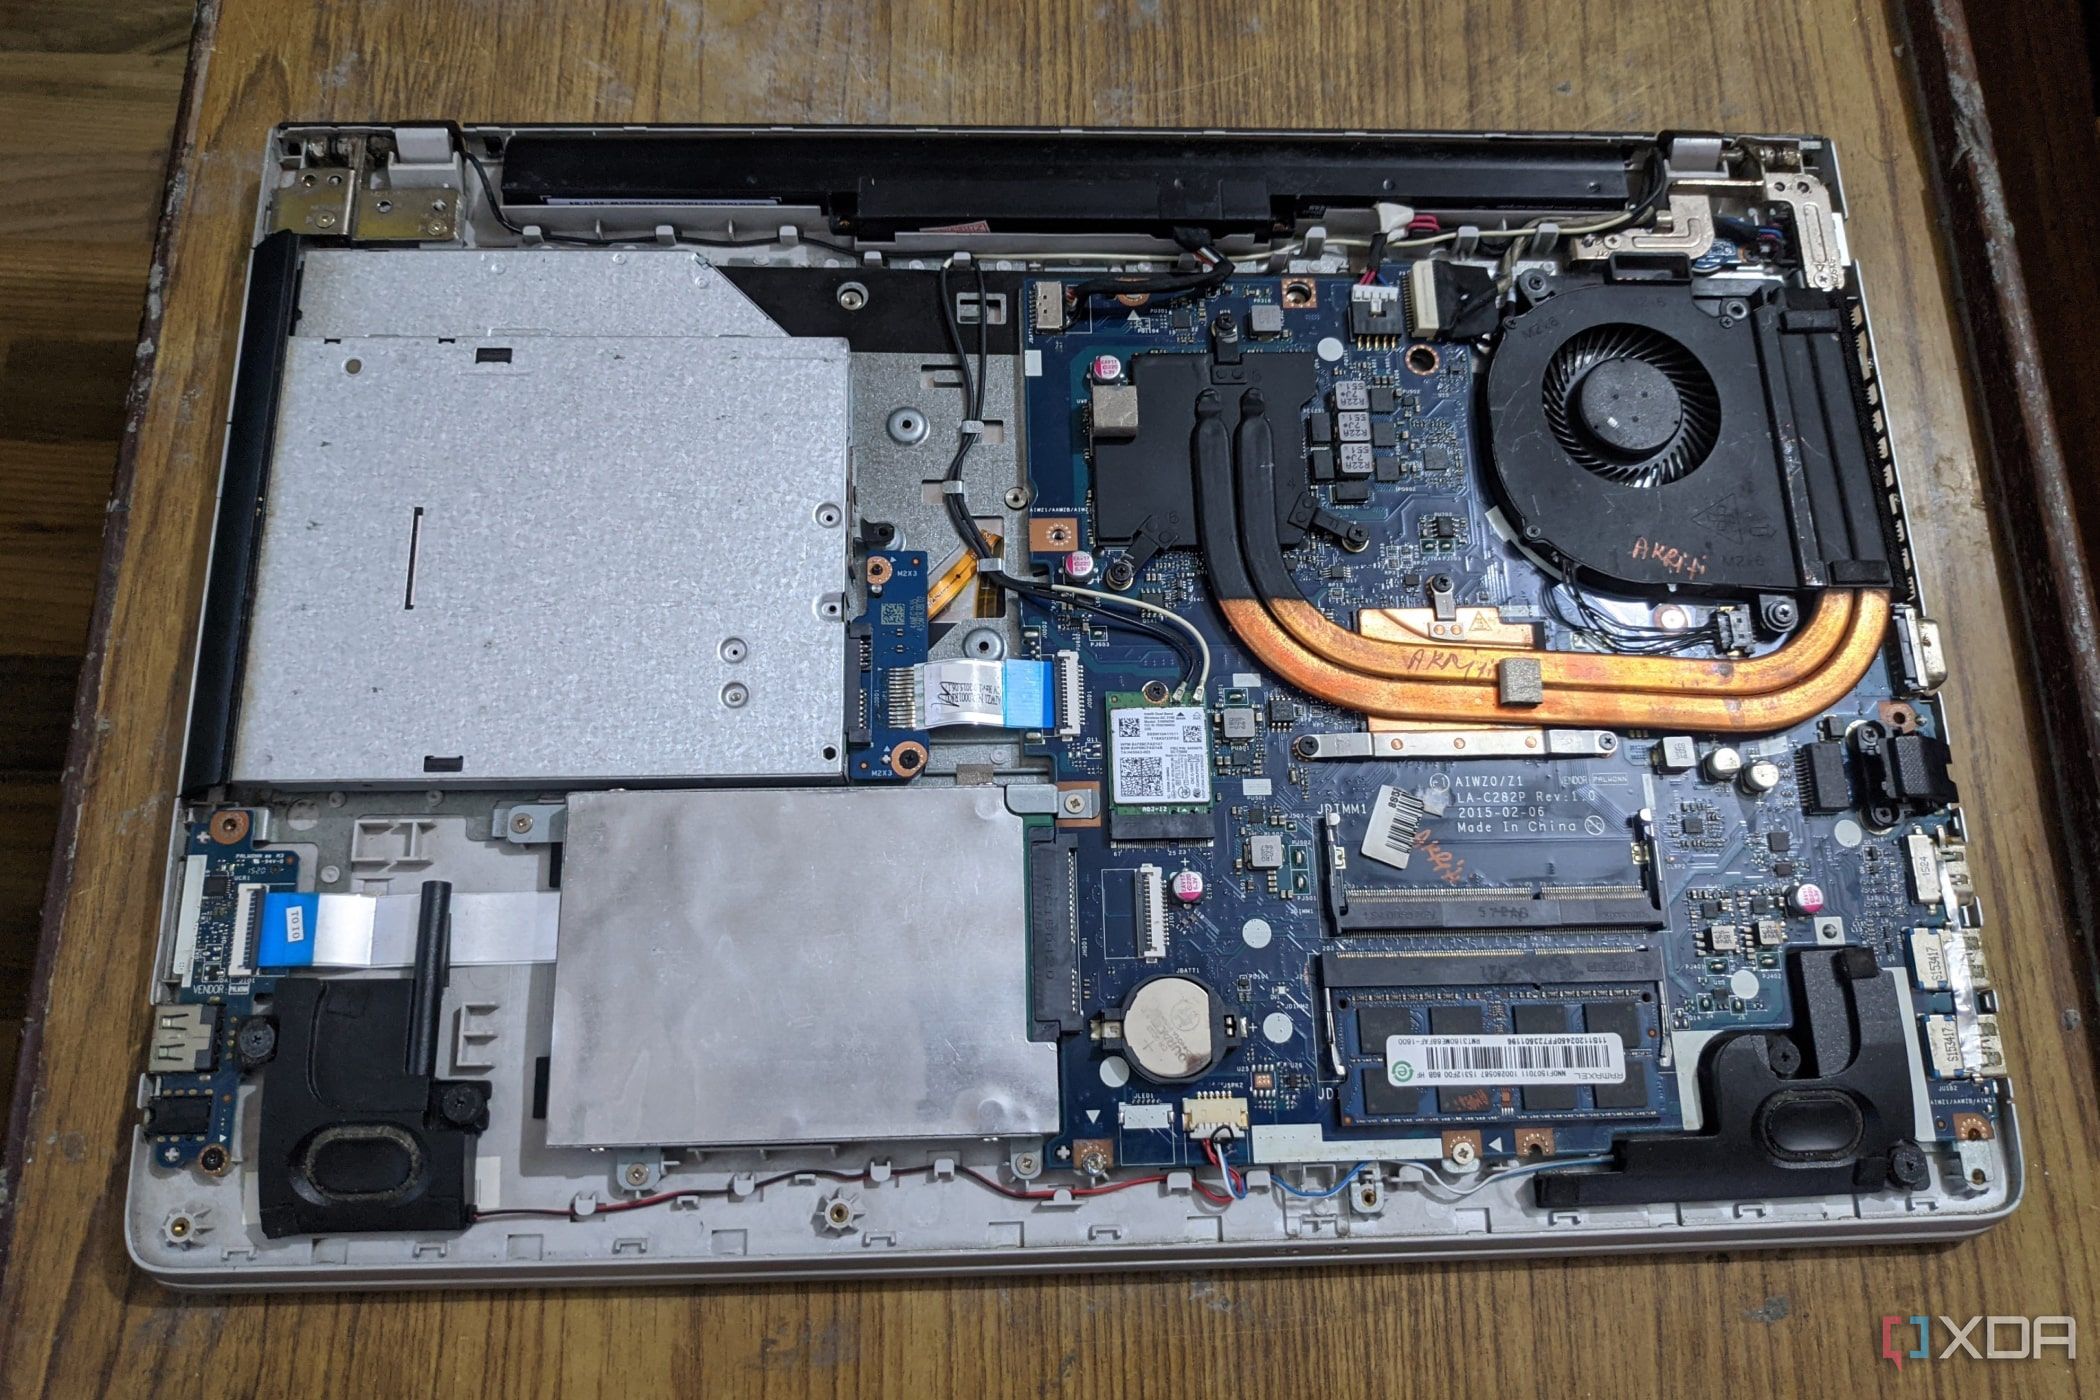 The internals of the Lenovo Z51-70 80K600VVIN laptop.